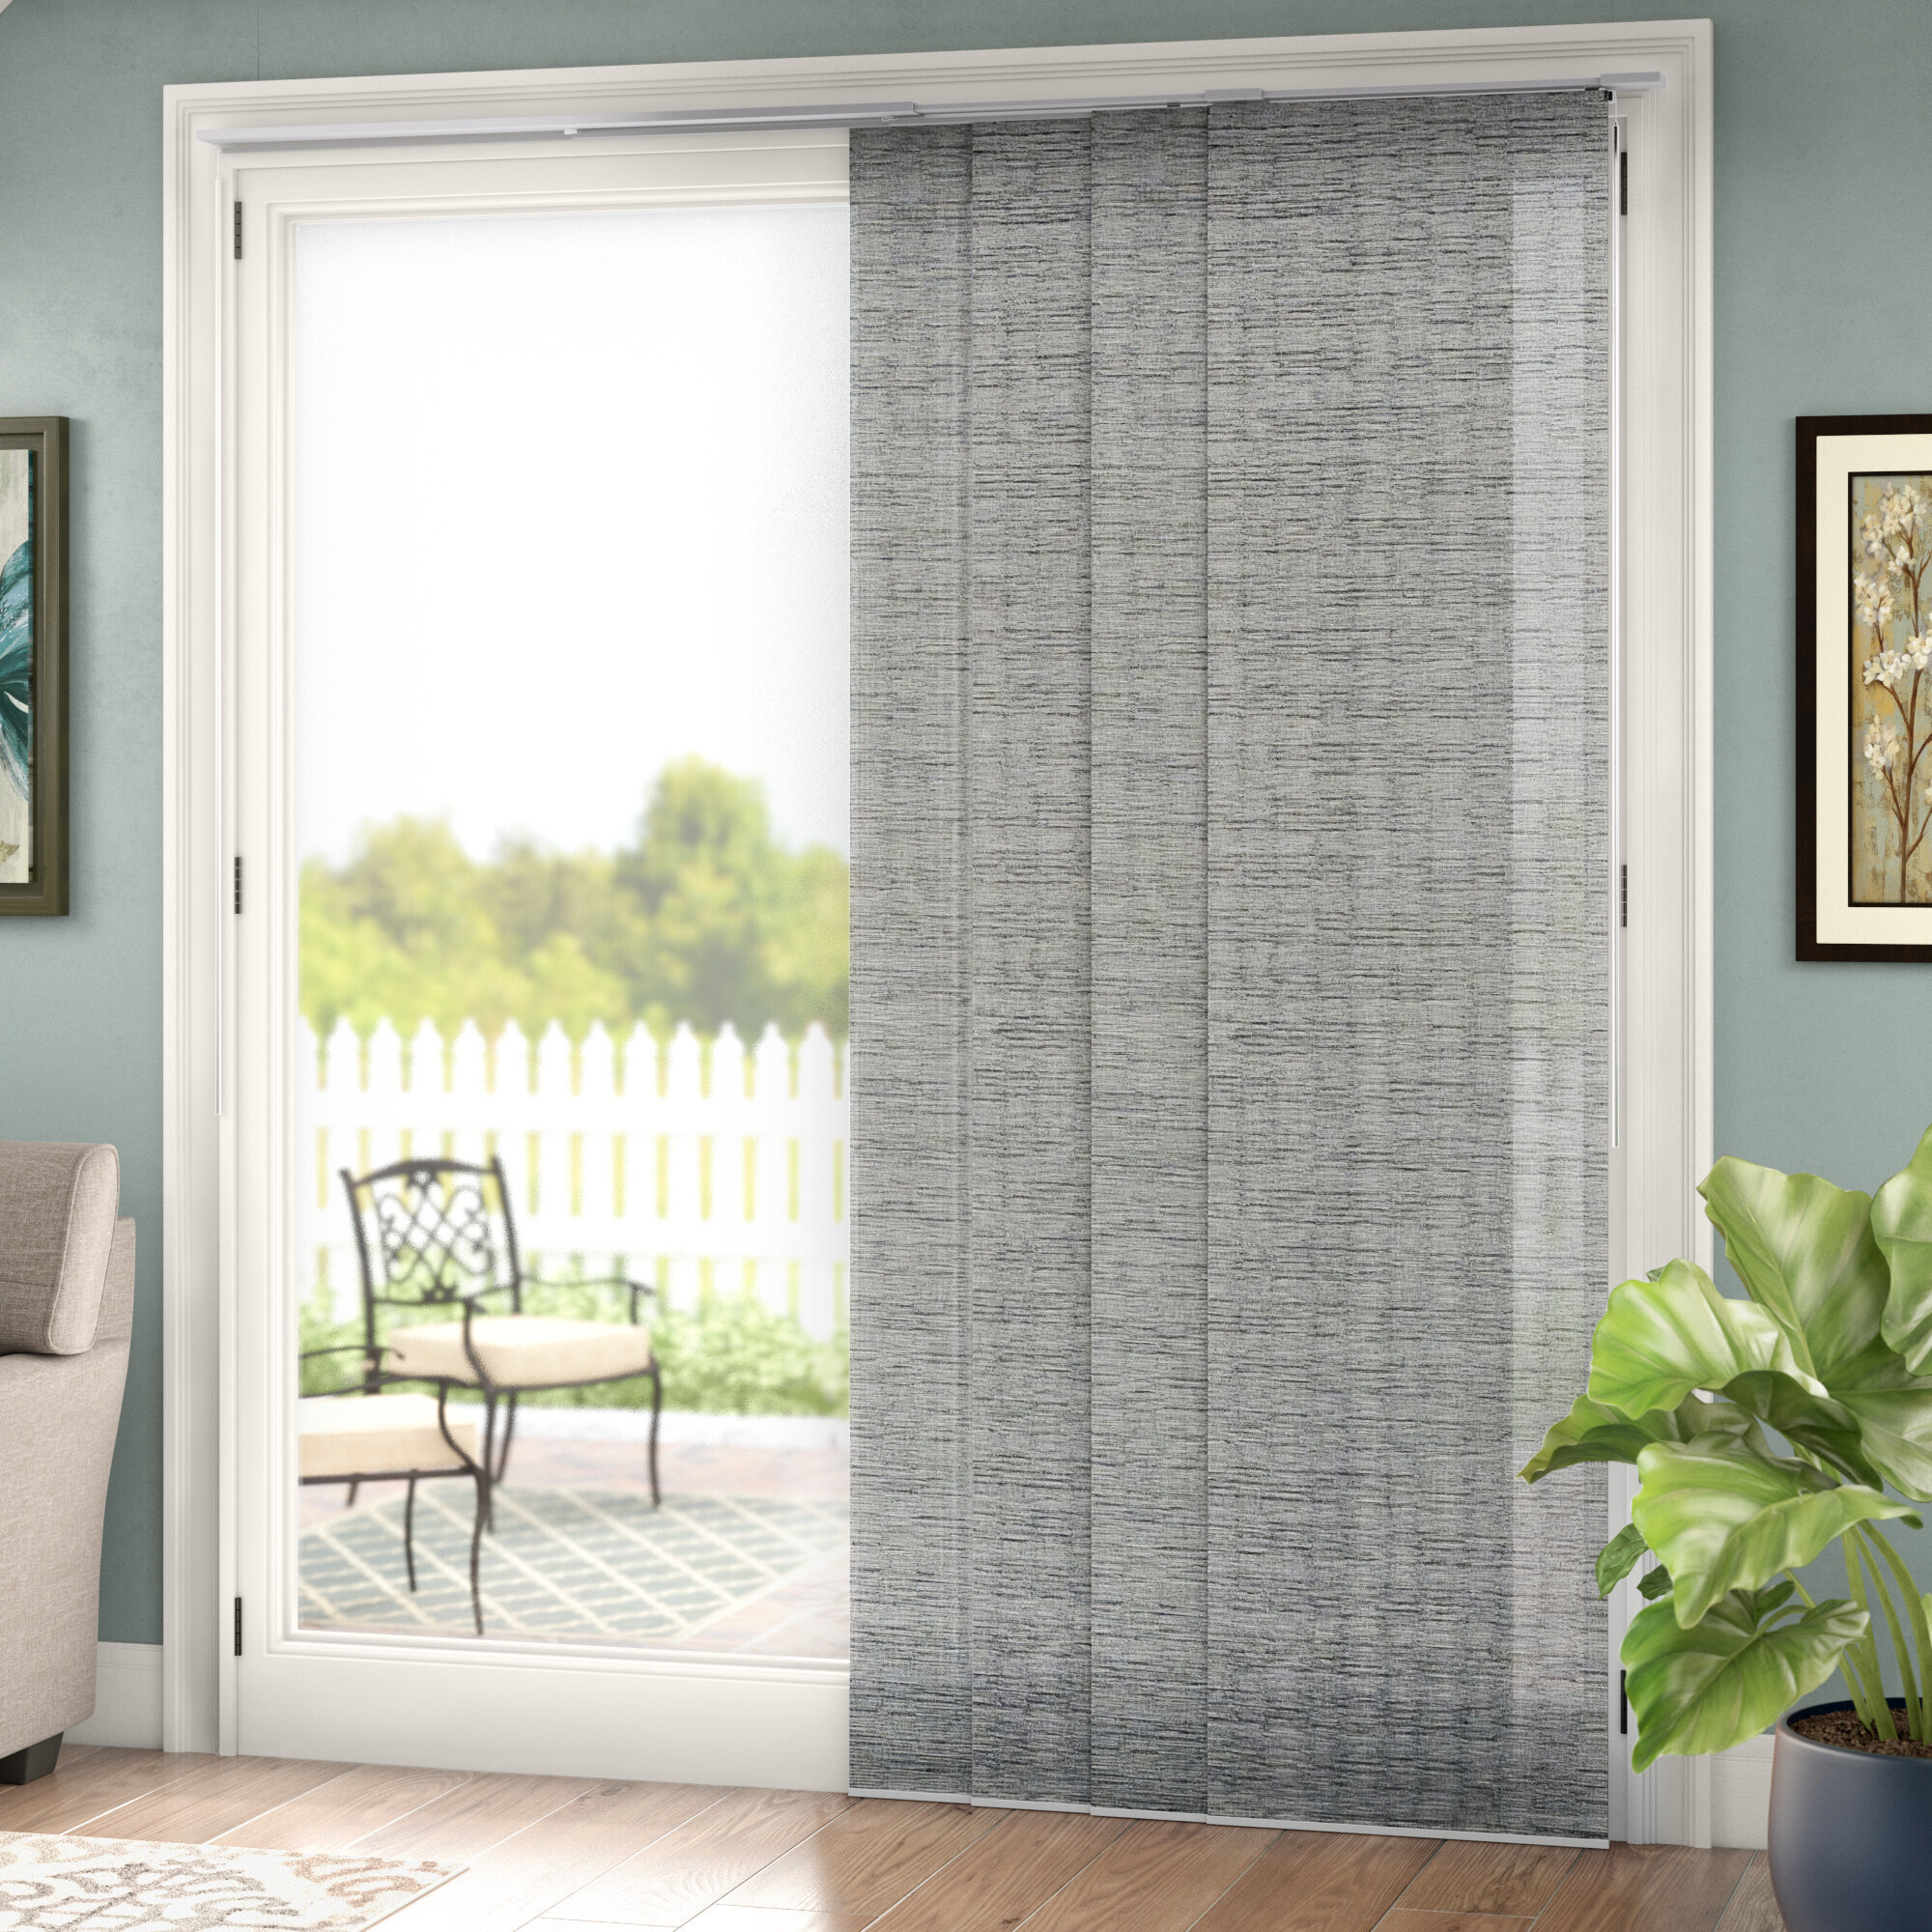 Natural Woven Adjustable Sliding Panel Blinds Patio Door Vertical Blind Curtain 